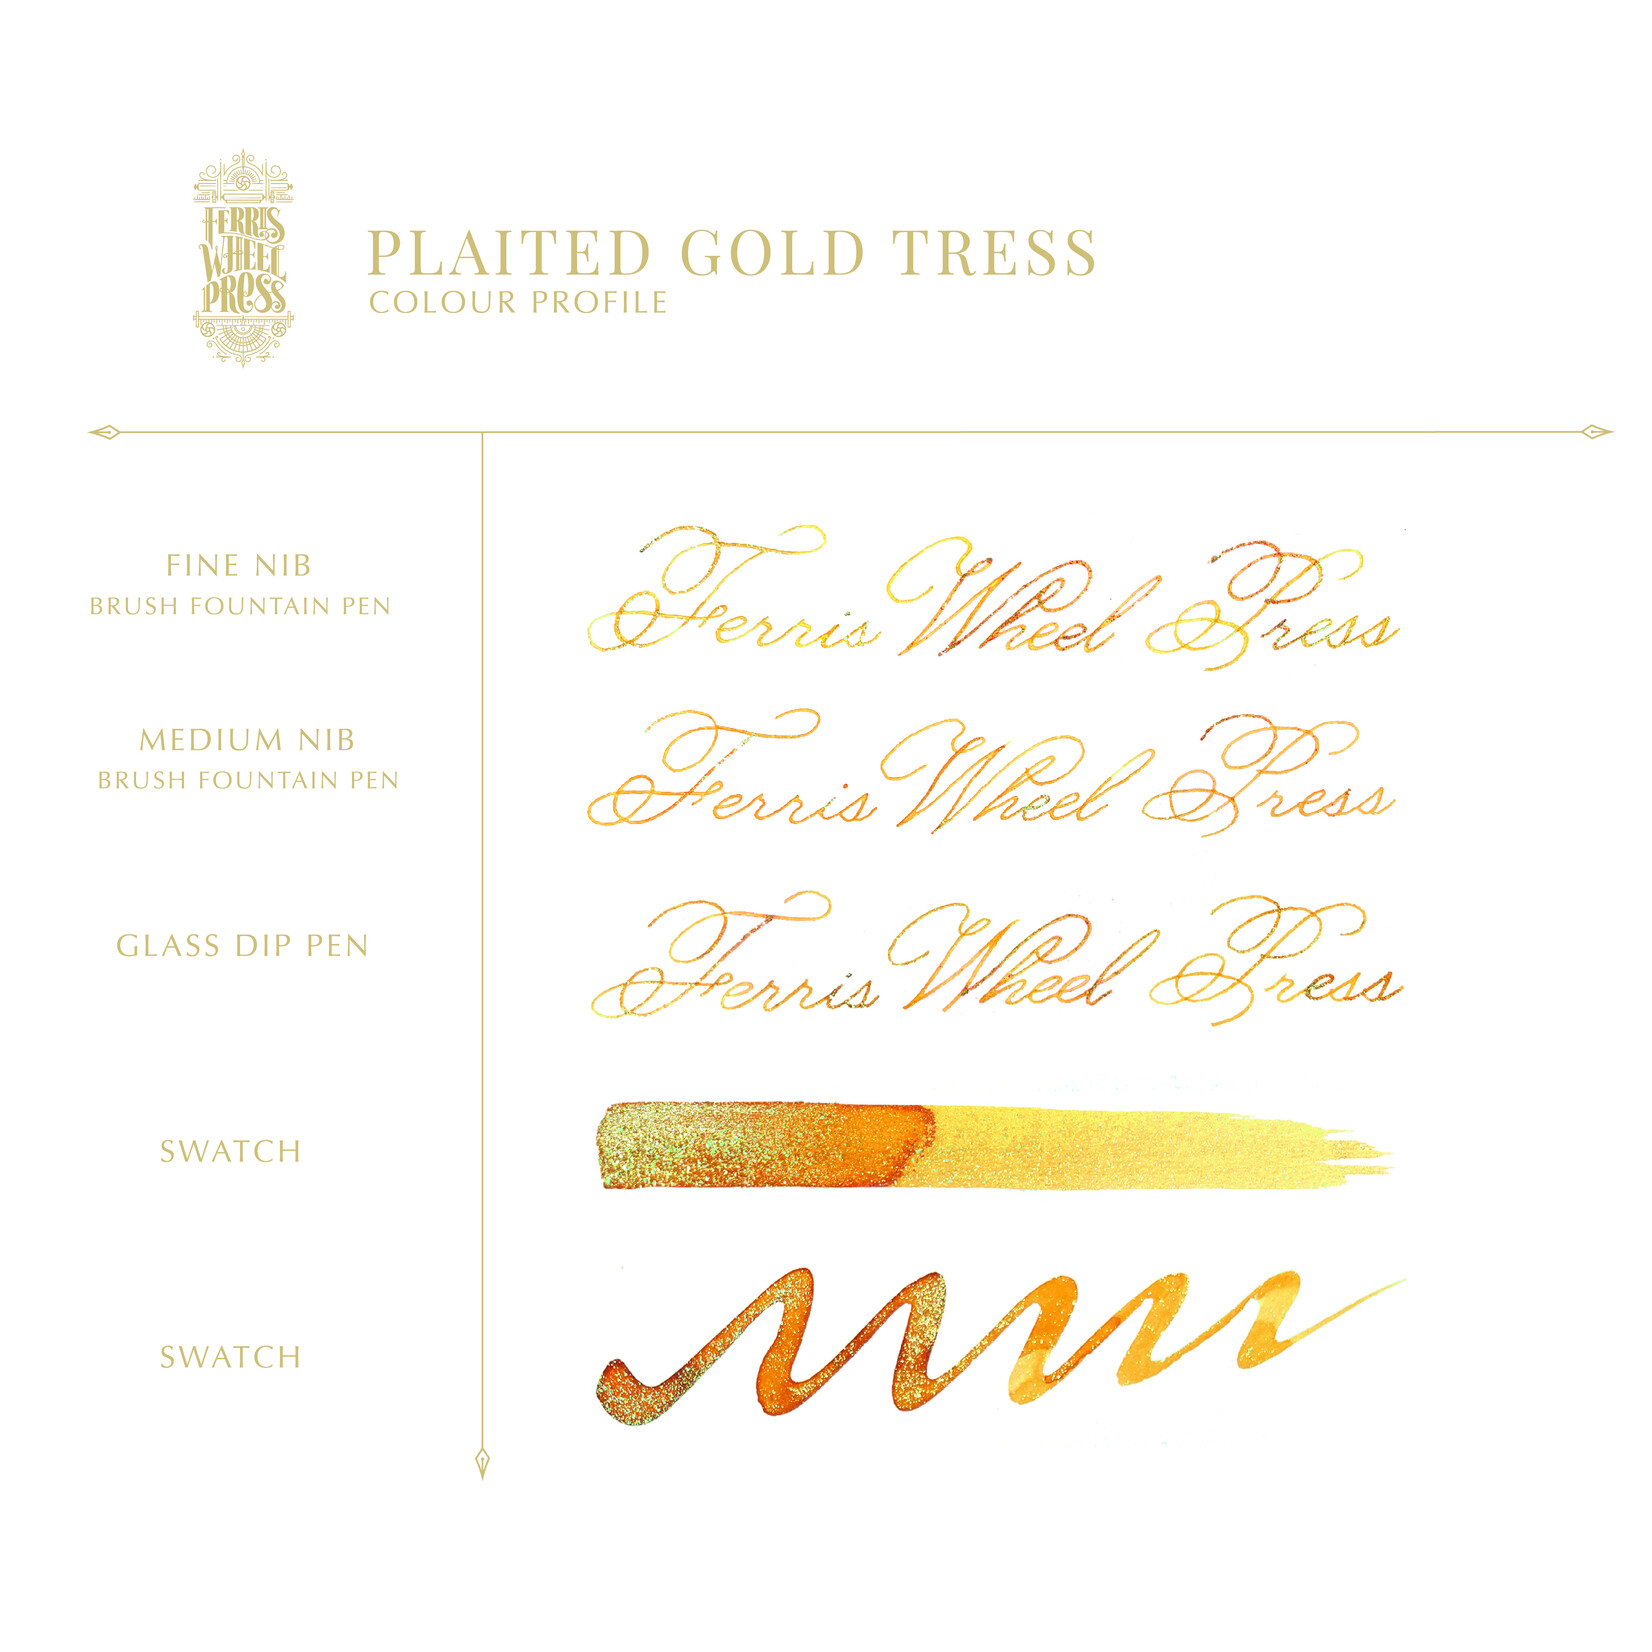 FERRIS WHEEL PRESS INK 20ML PLAITED GOLD TRESS